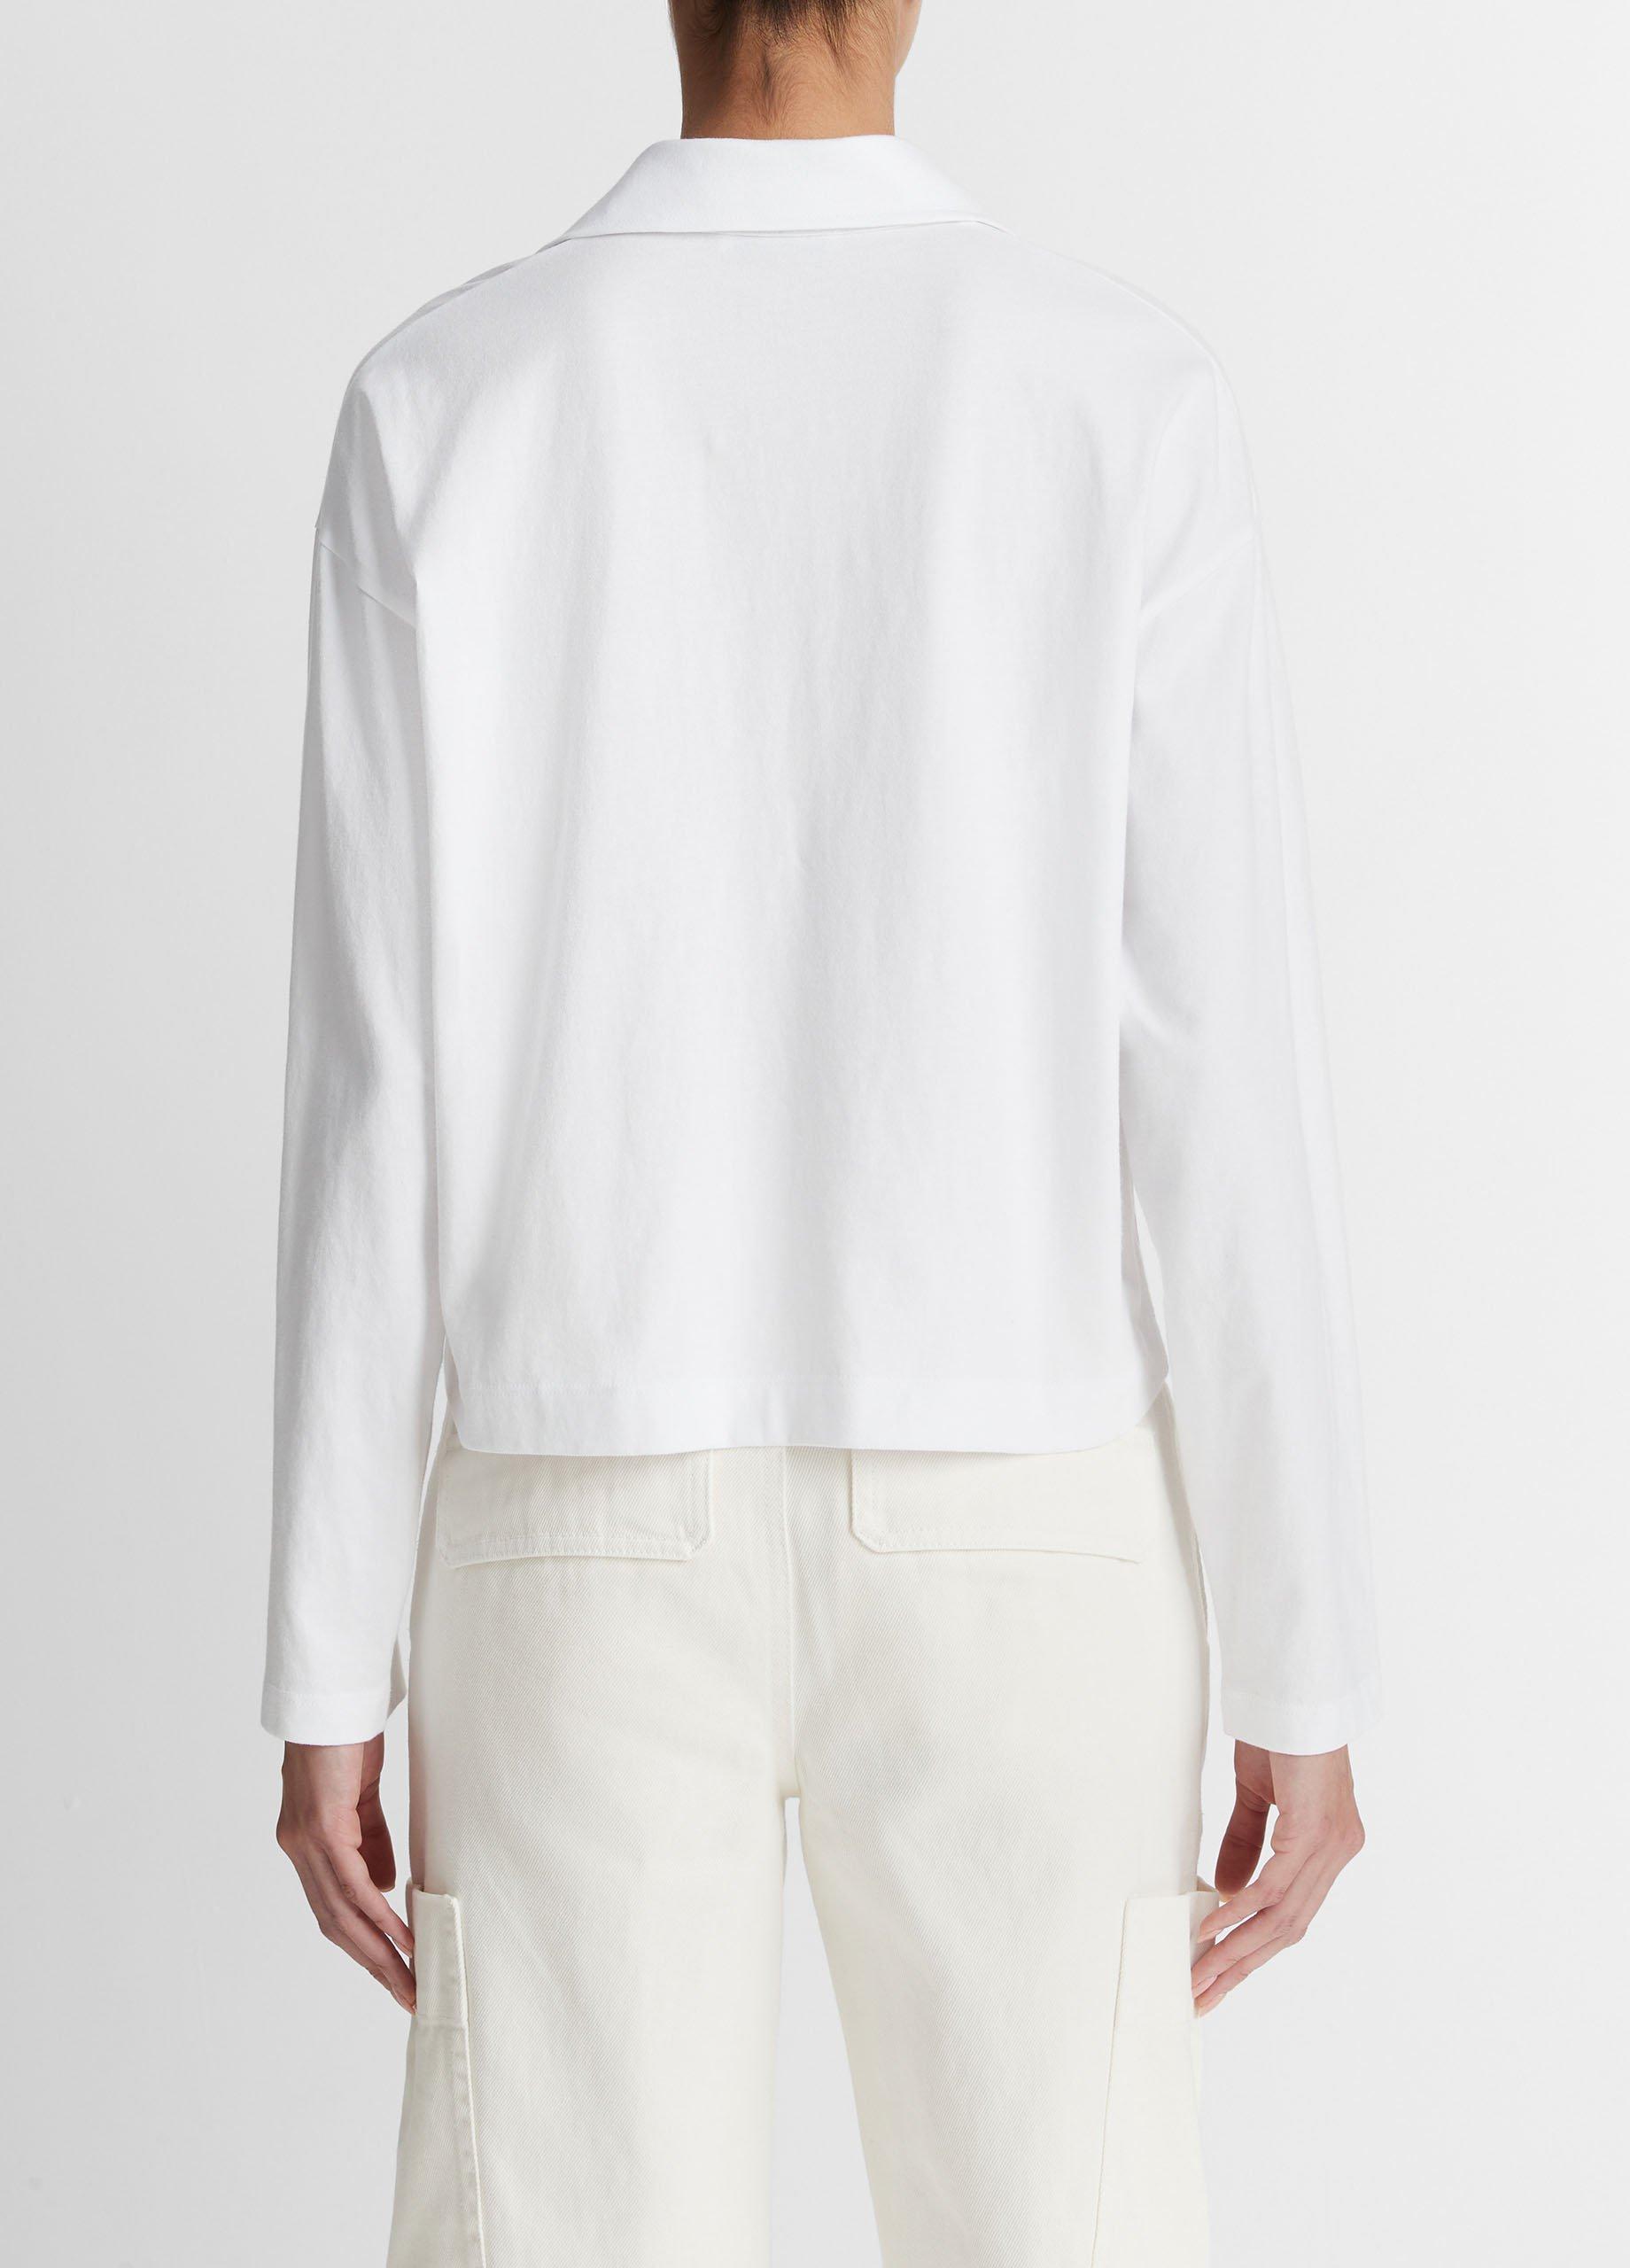 Ansenesna Polo Shirts for Men V Neck Blouses Long Sleeve Shirt Classic  Beach Shirts Casual Shirt in Custom Fit (White, M) : : Fashion